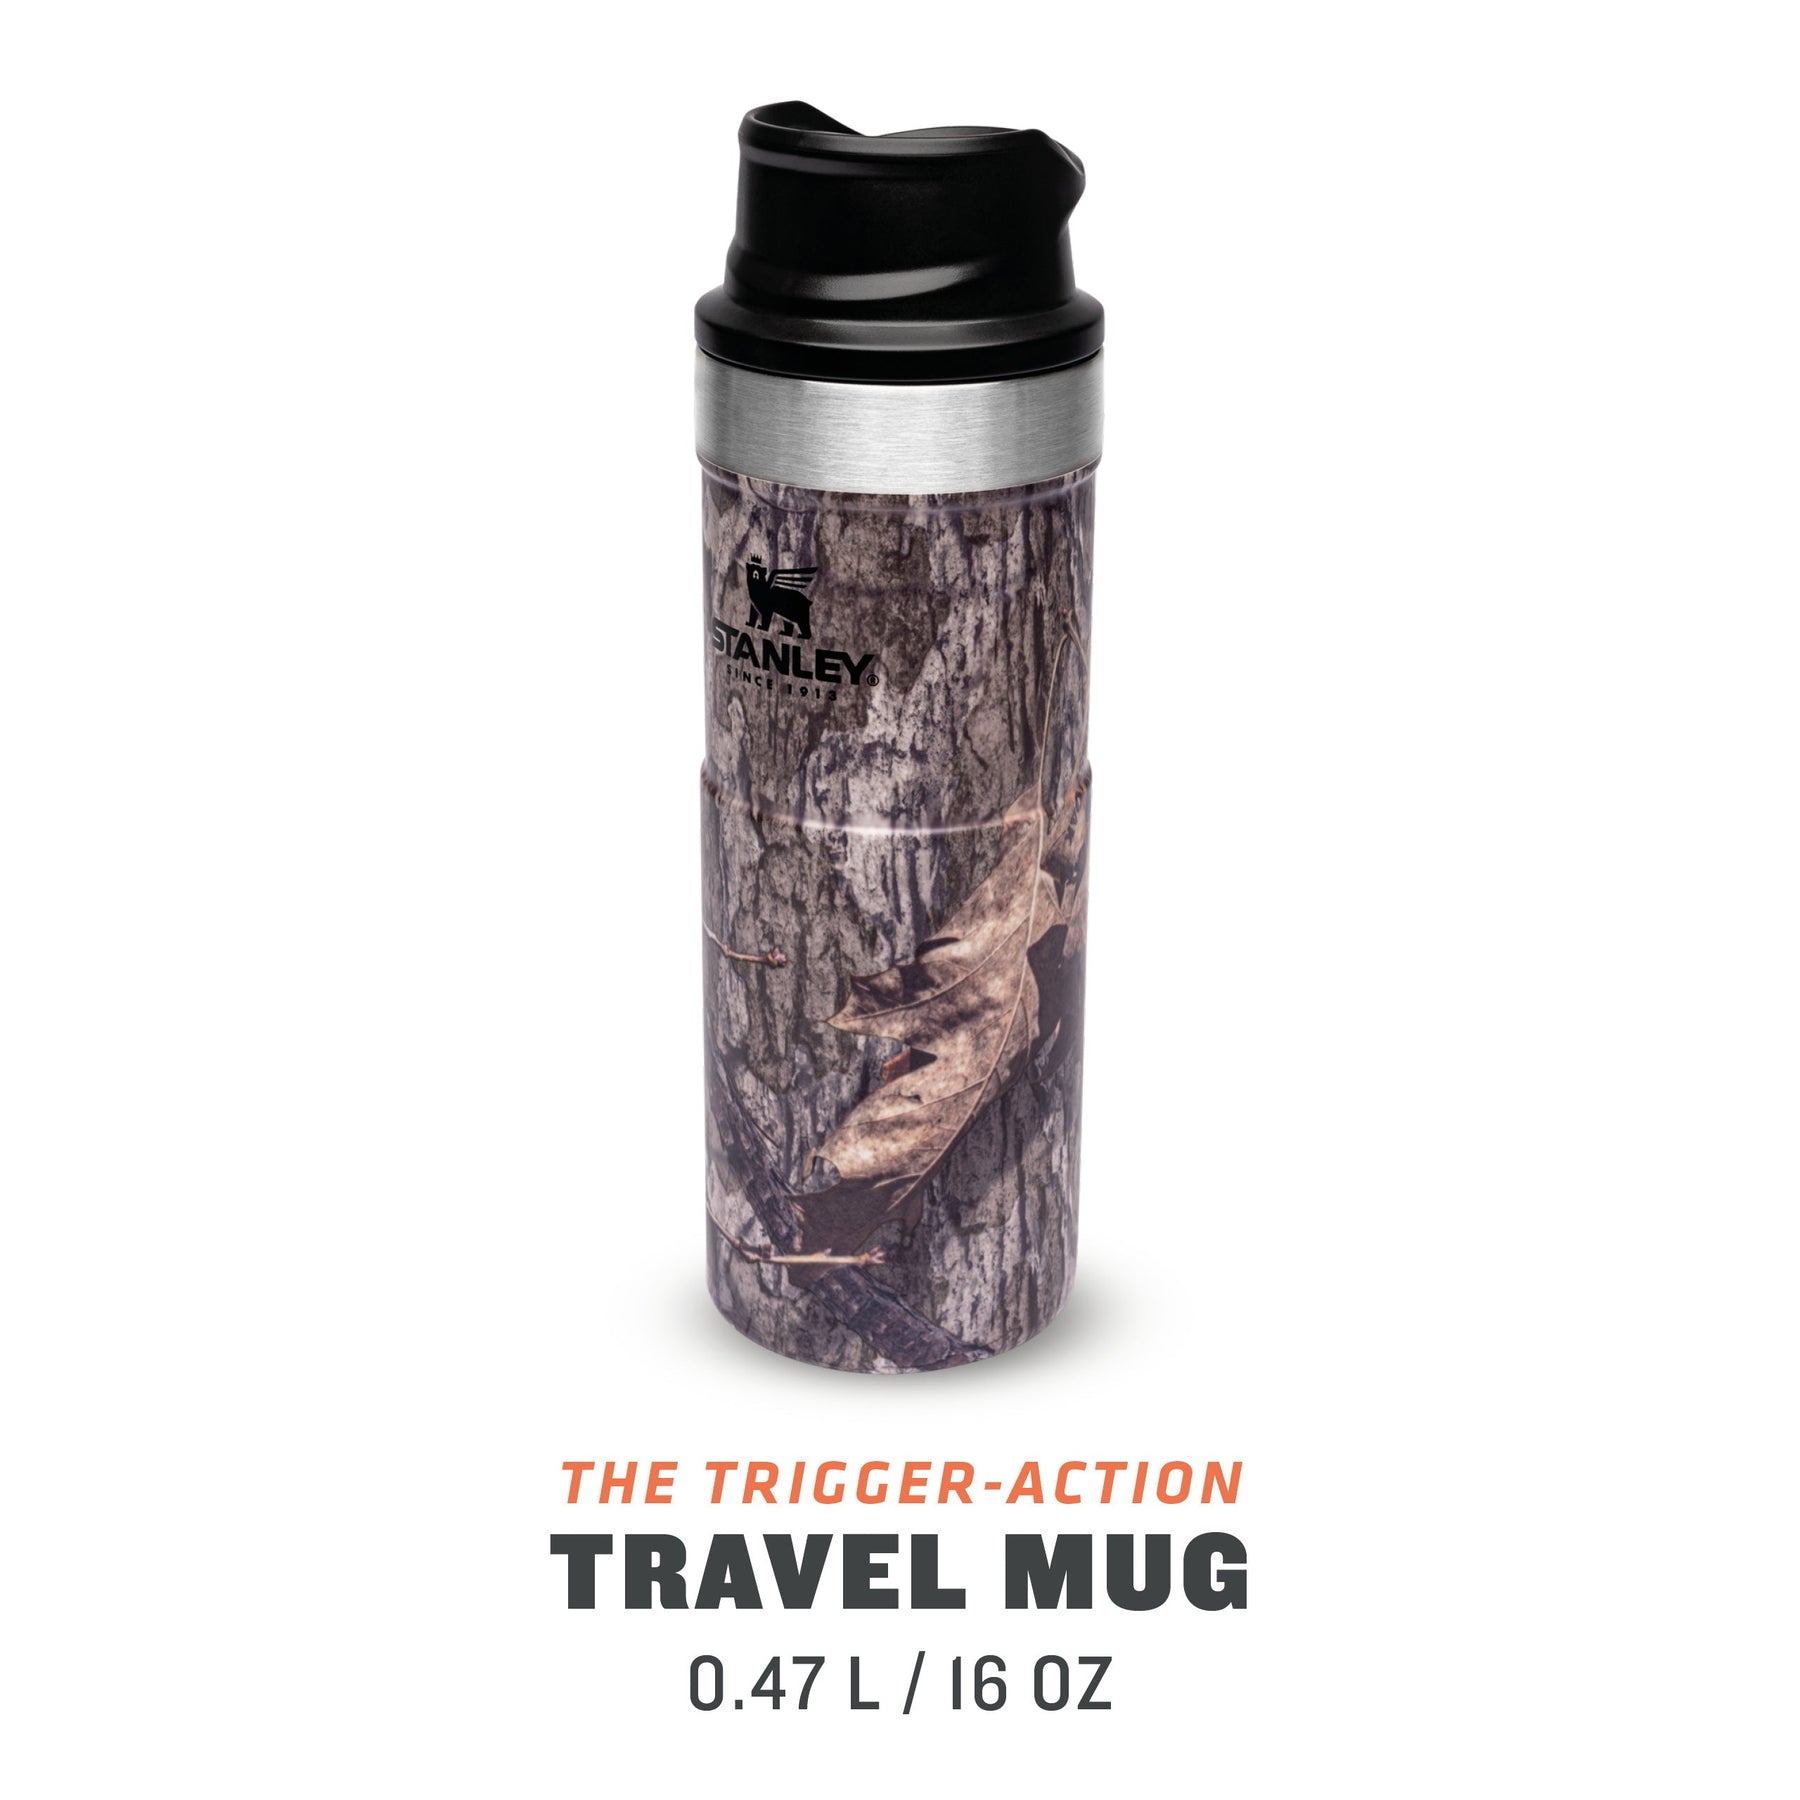 Stanley Classic Trigger-Action Travel Mug 16oz /470ml Peter Perch Tan